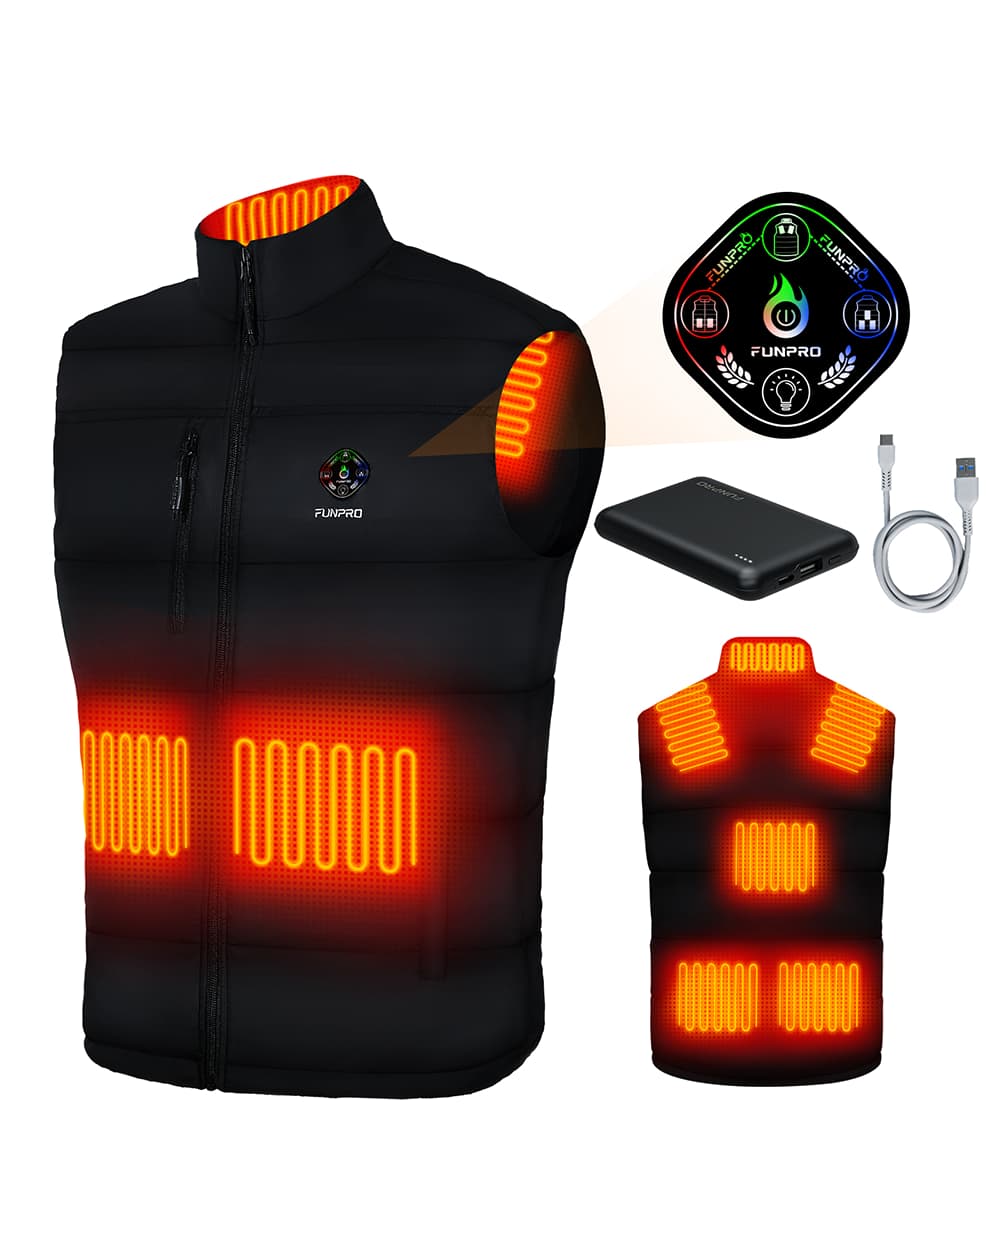 FUNPRO Men's Nylon Heated Vest(With Battery) - Black